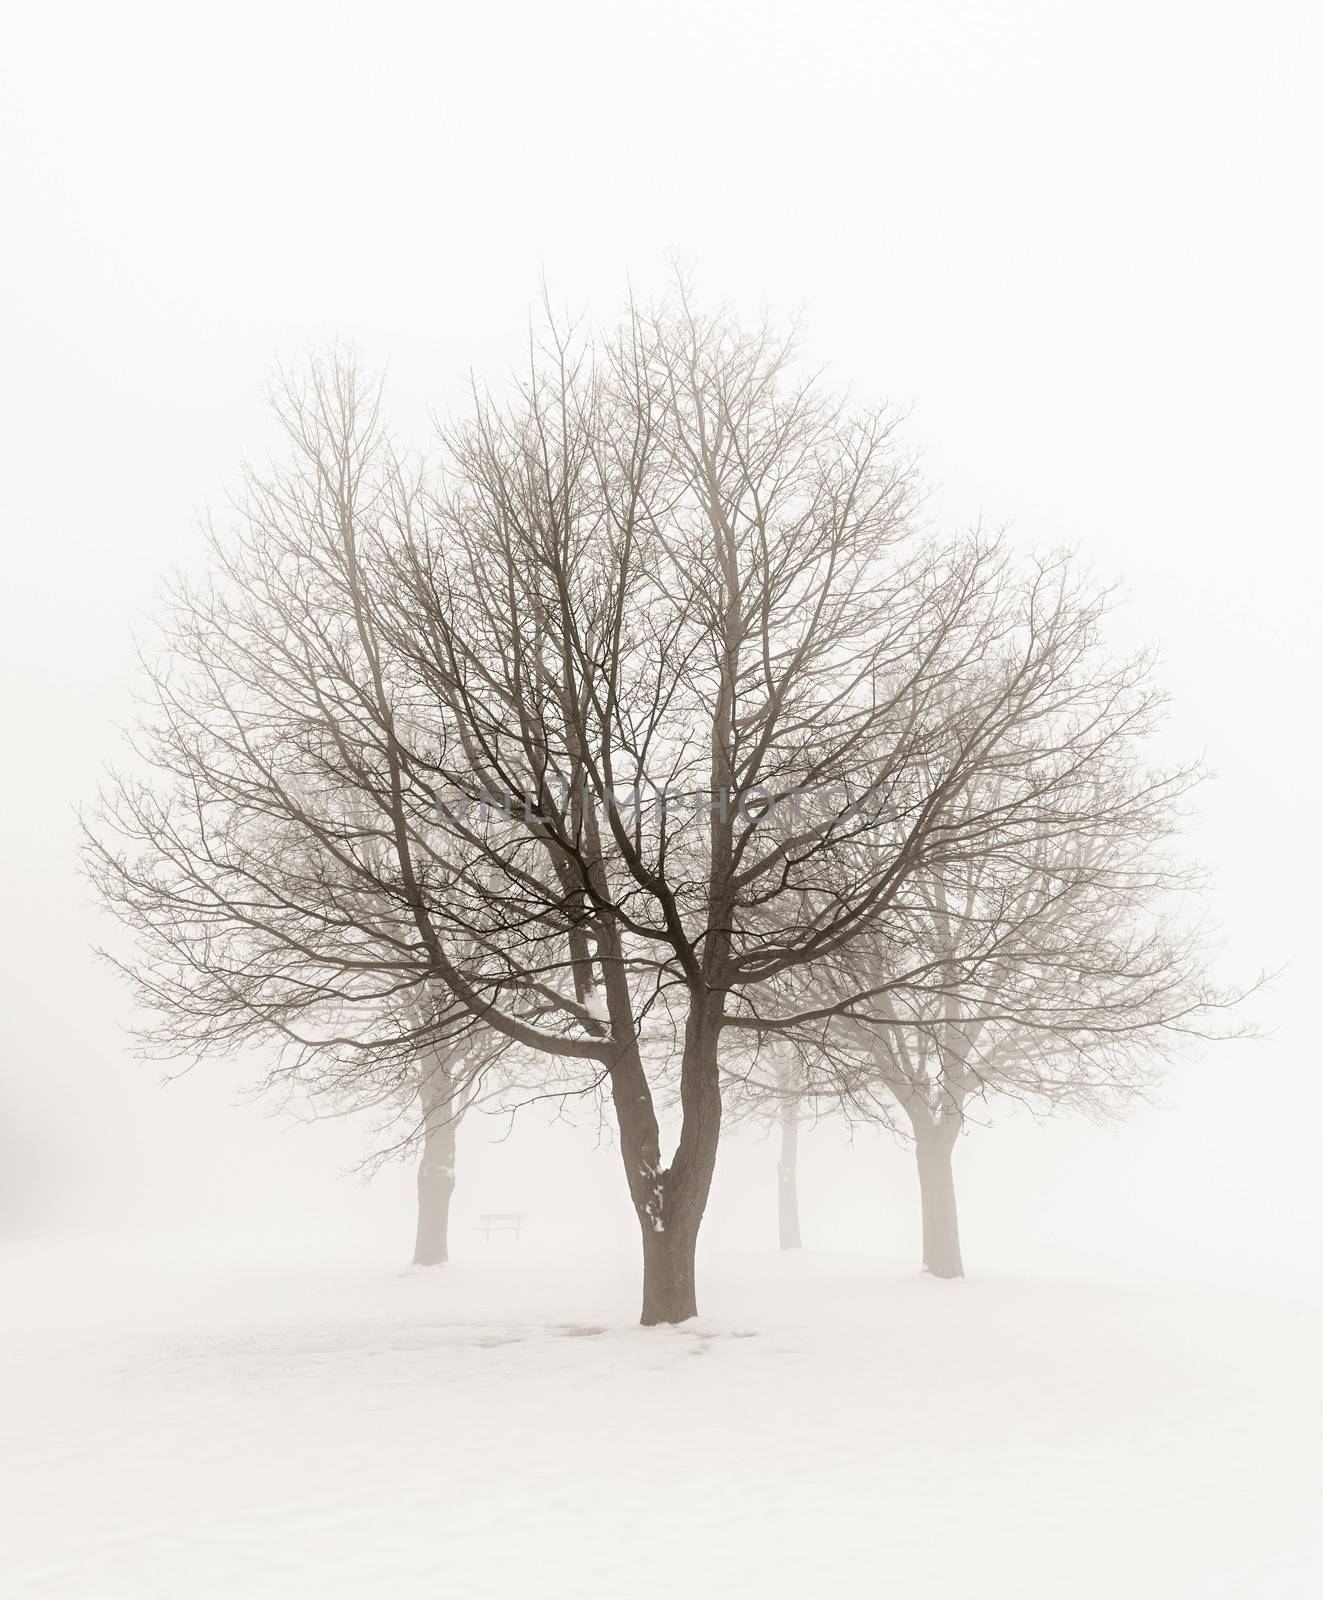 Winter scene of leafless trees in fog sepia tone